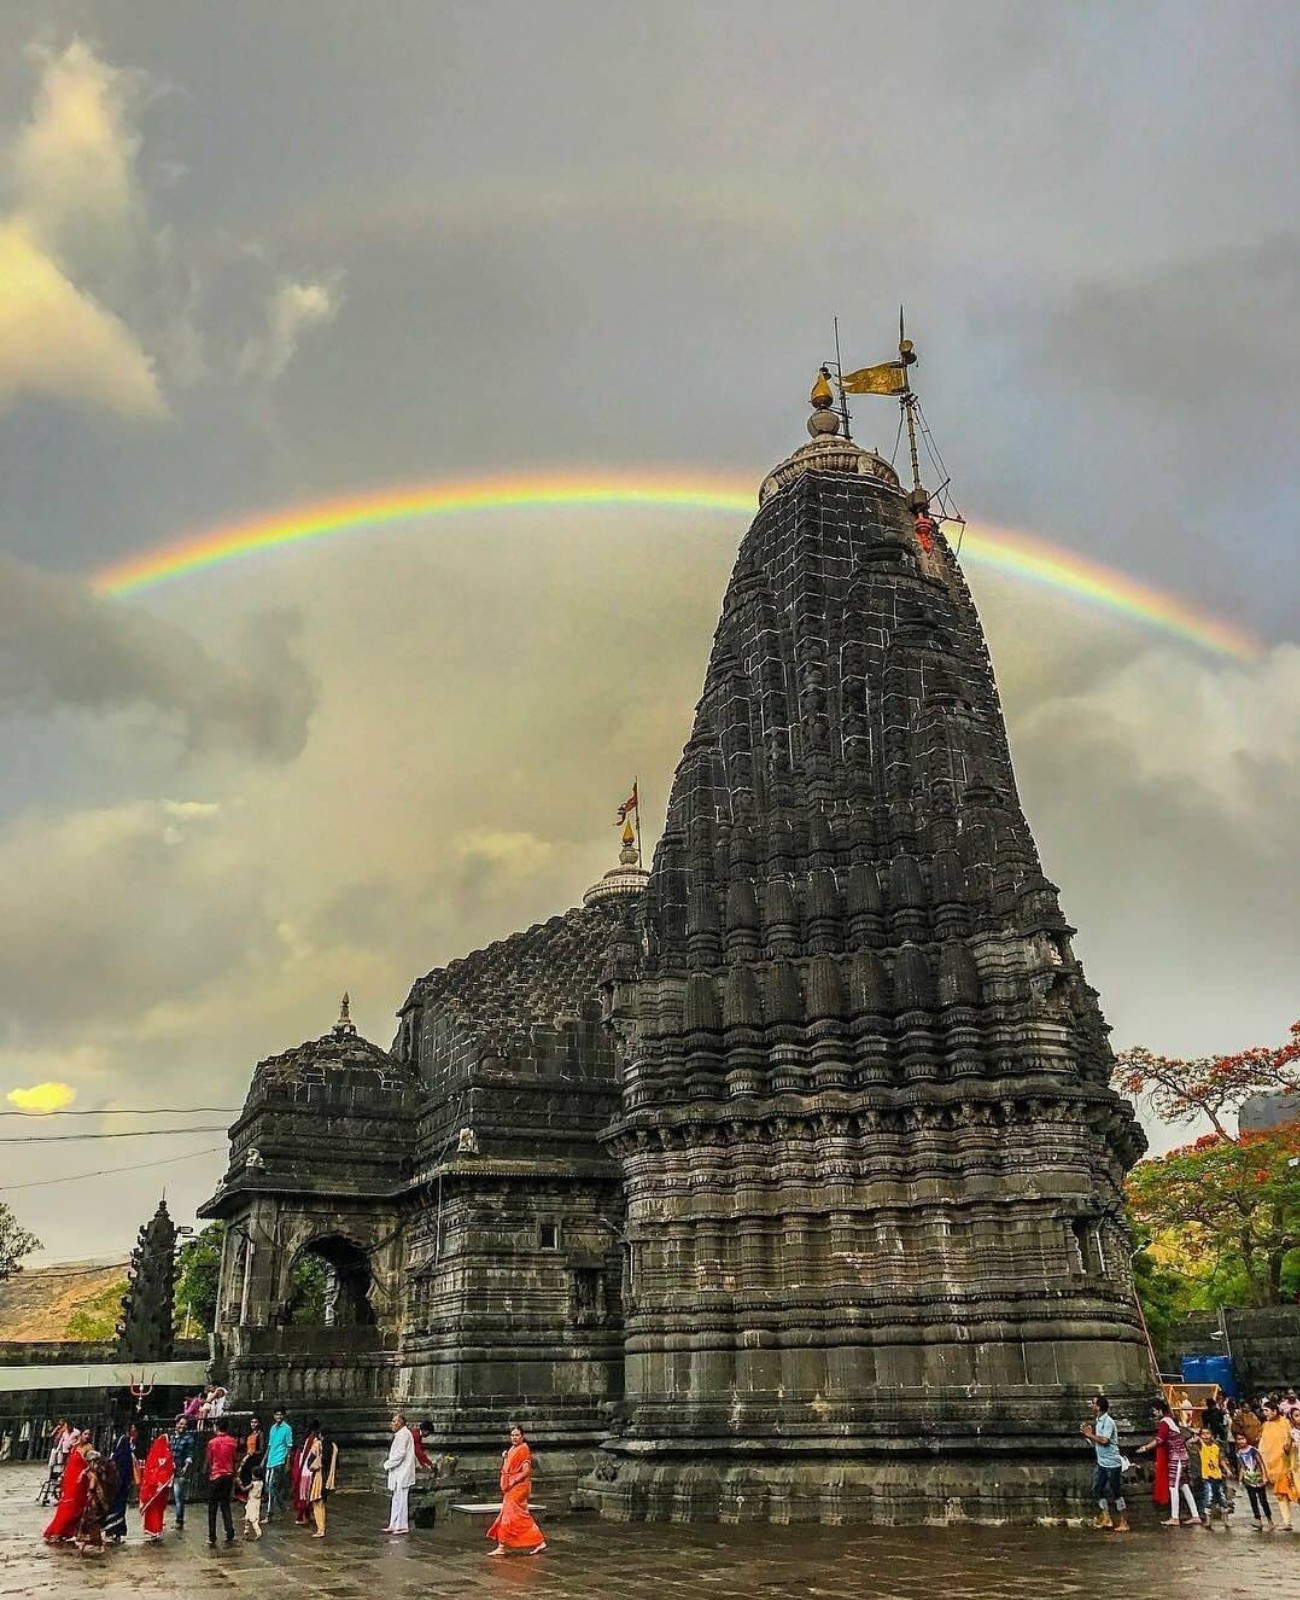 triambakeshwar temple with rainbow